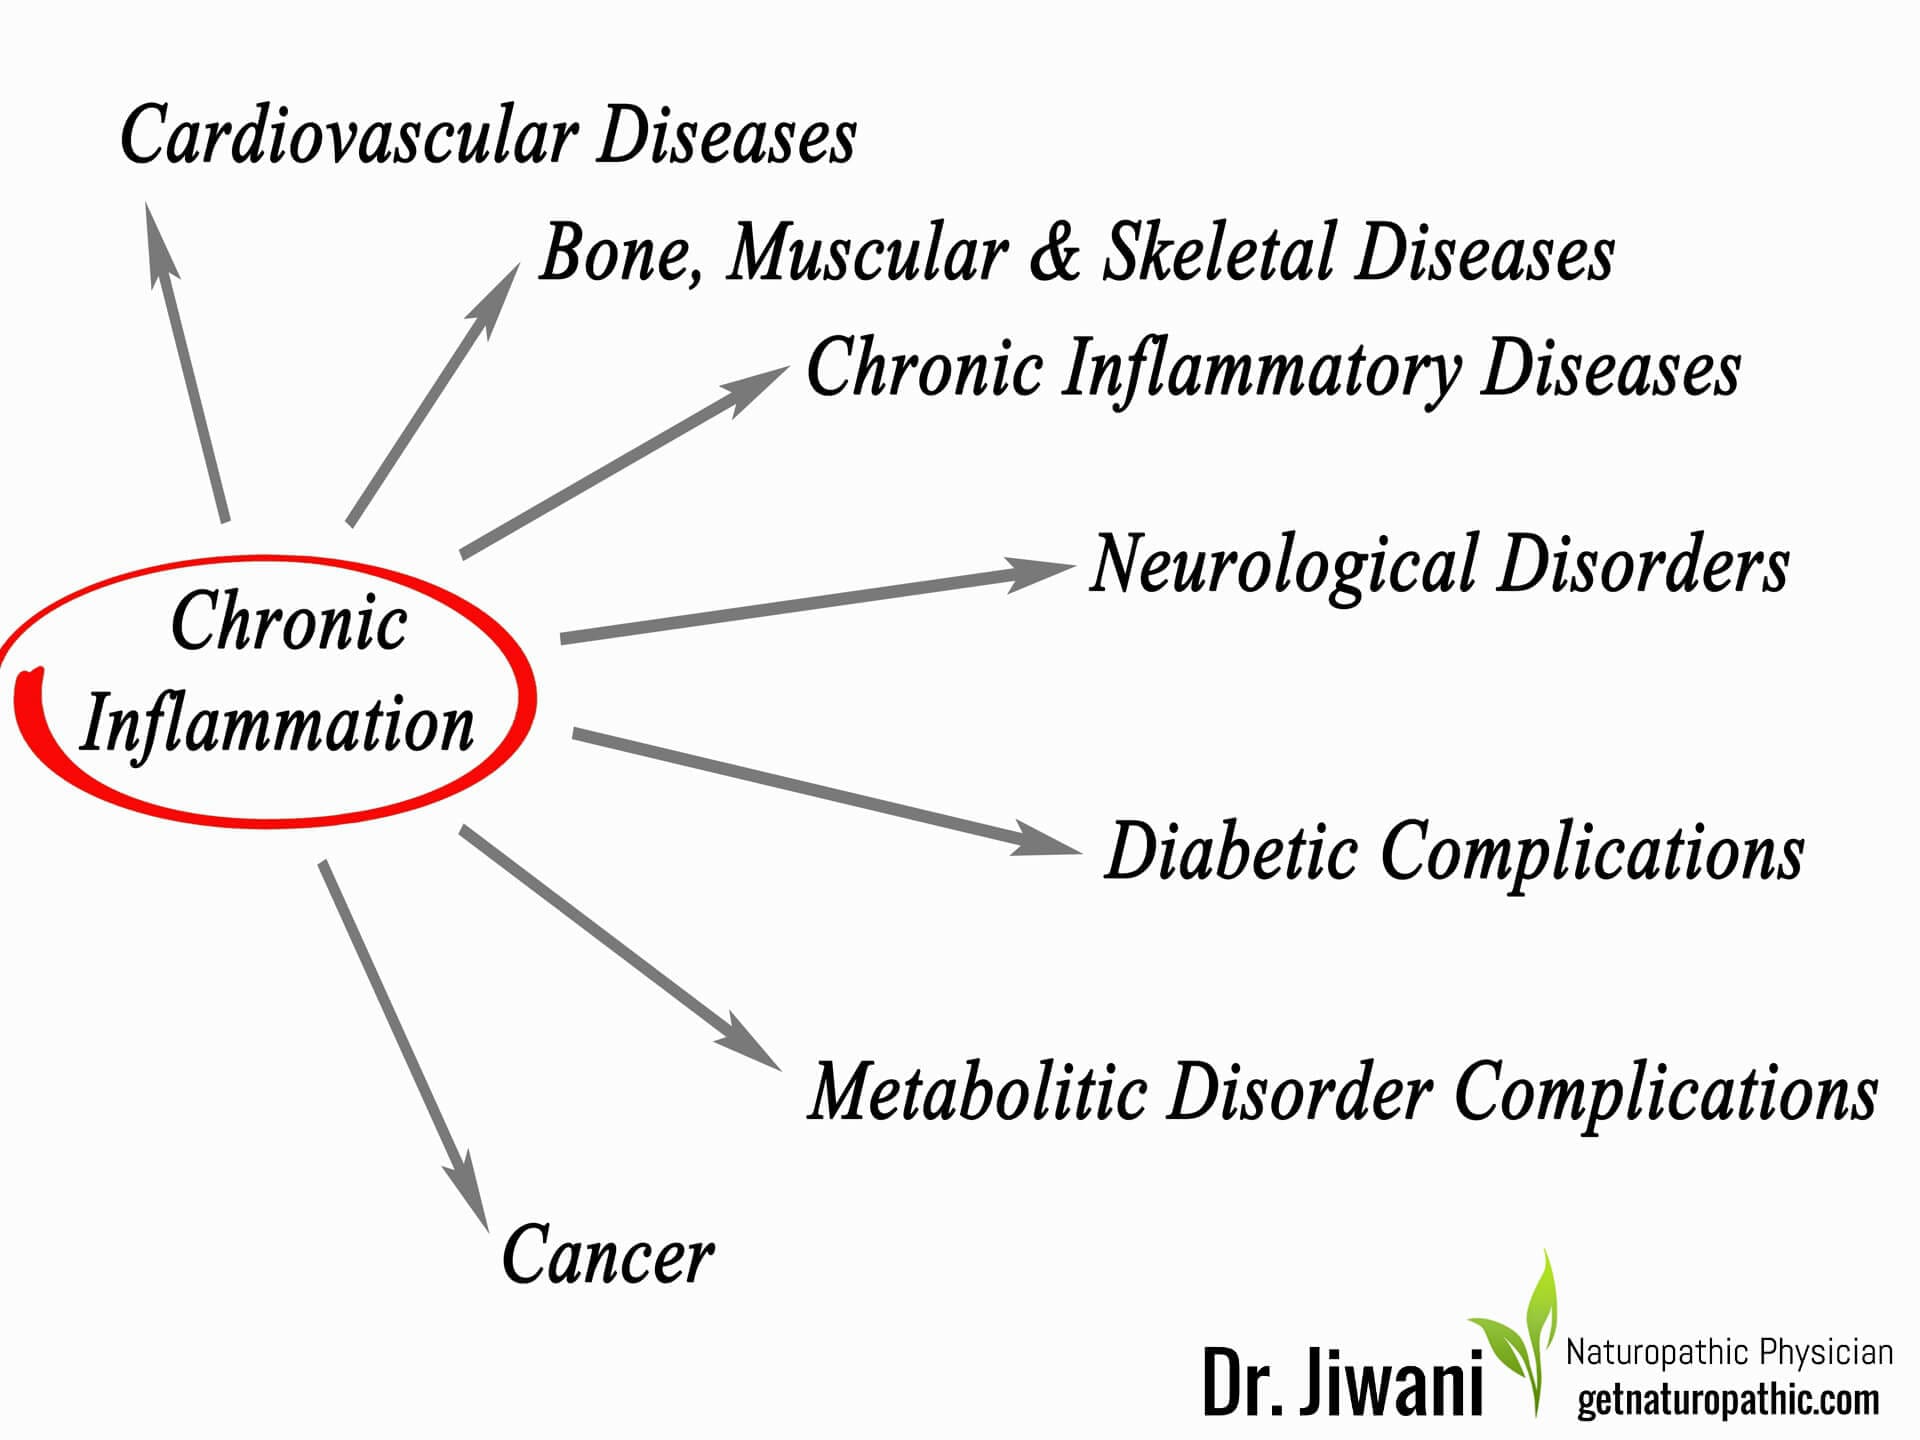 Keto Diet Health Benefits: Ketosis for Optimal Health & Fat Burning | Dr. Jiwani's Naturopathic Nuggets Blog